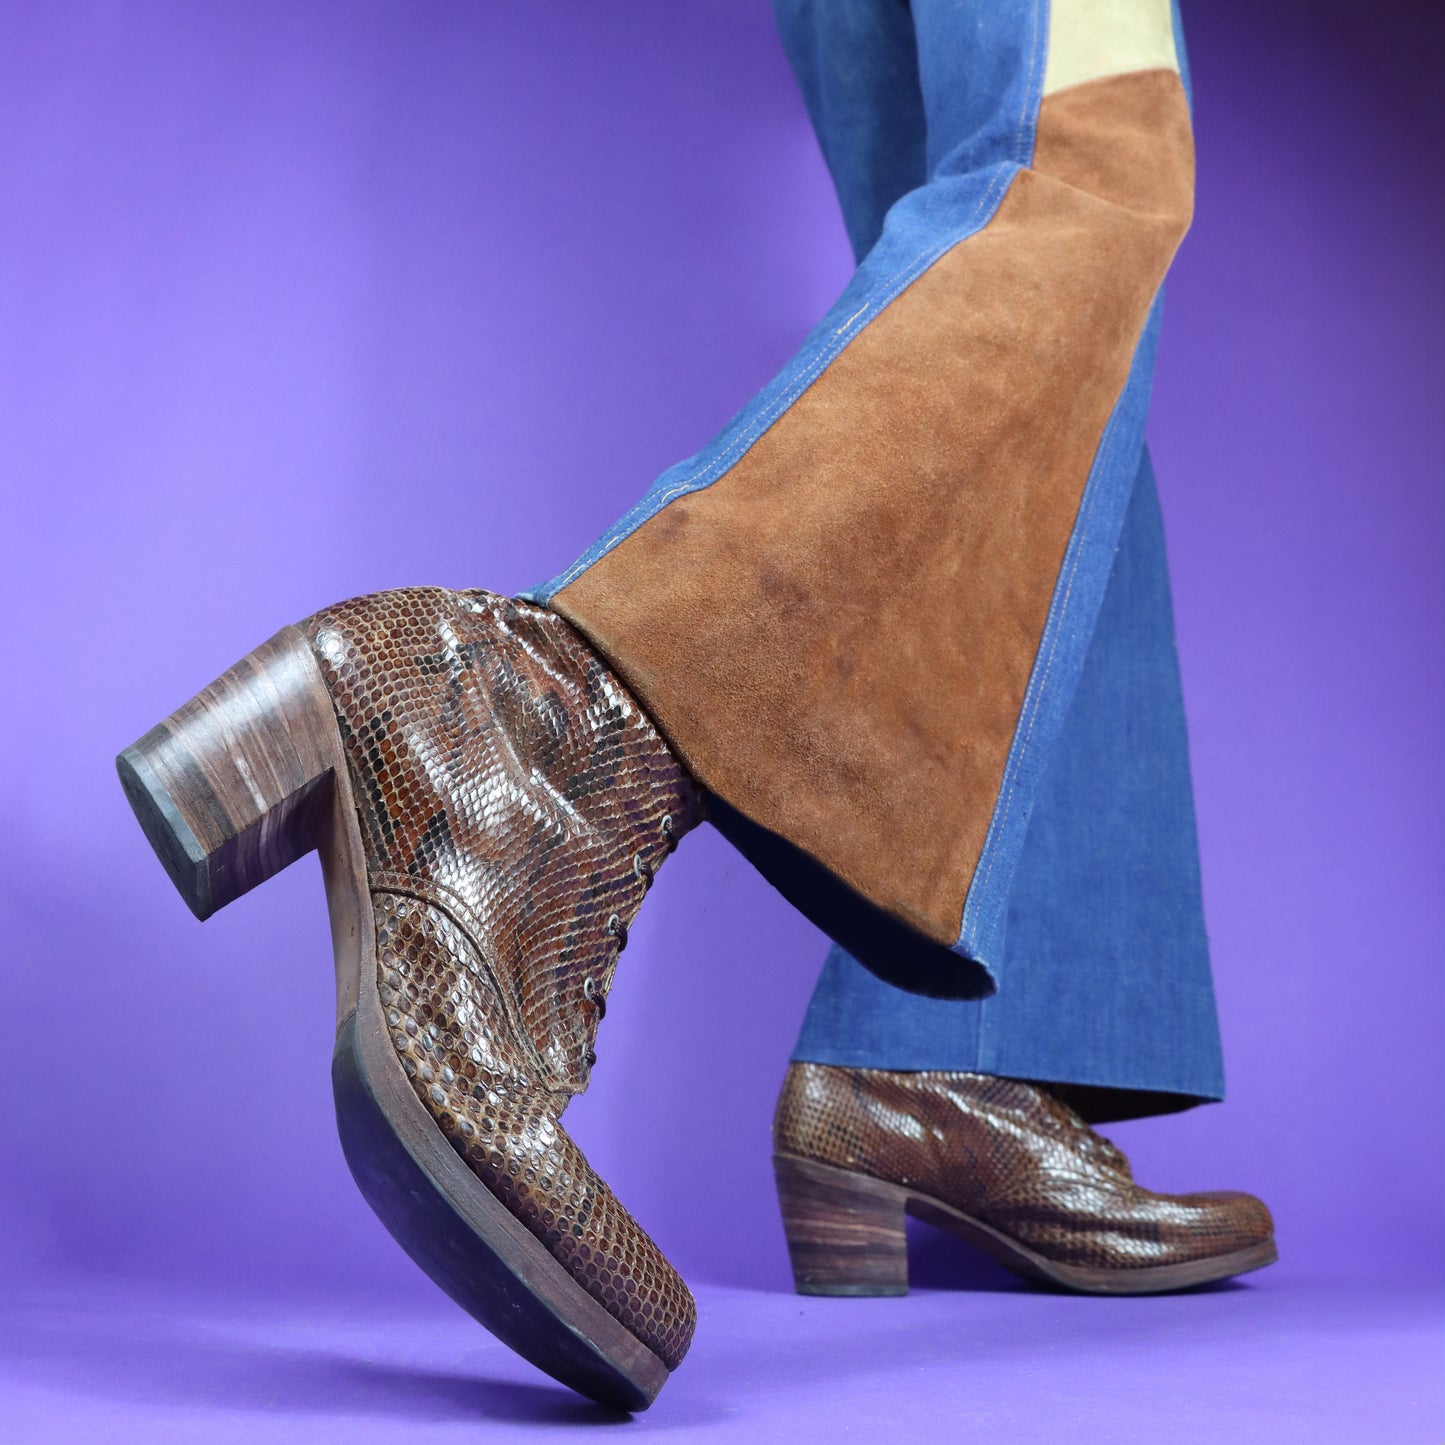 Vintage 1970s Gohil's Snakesin Lace Up Platform Boots